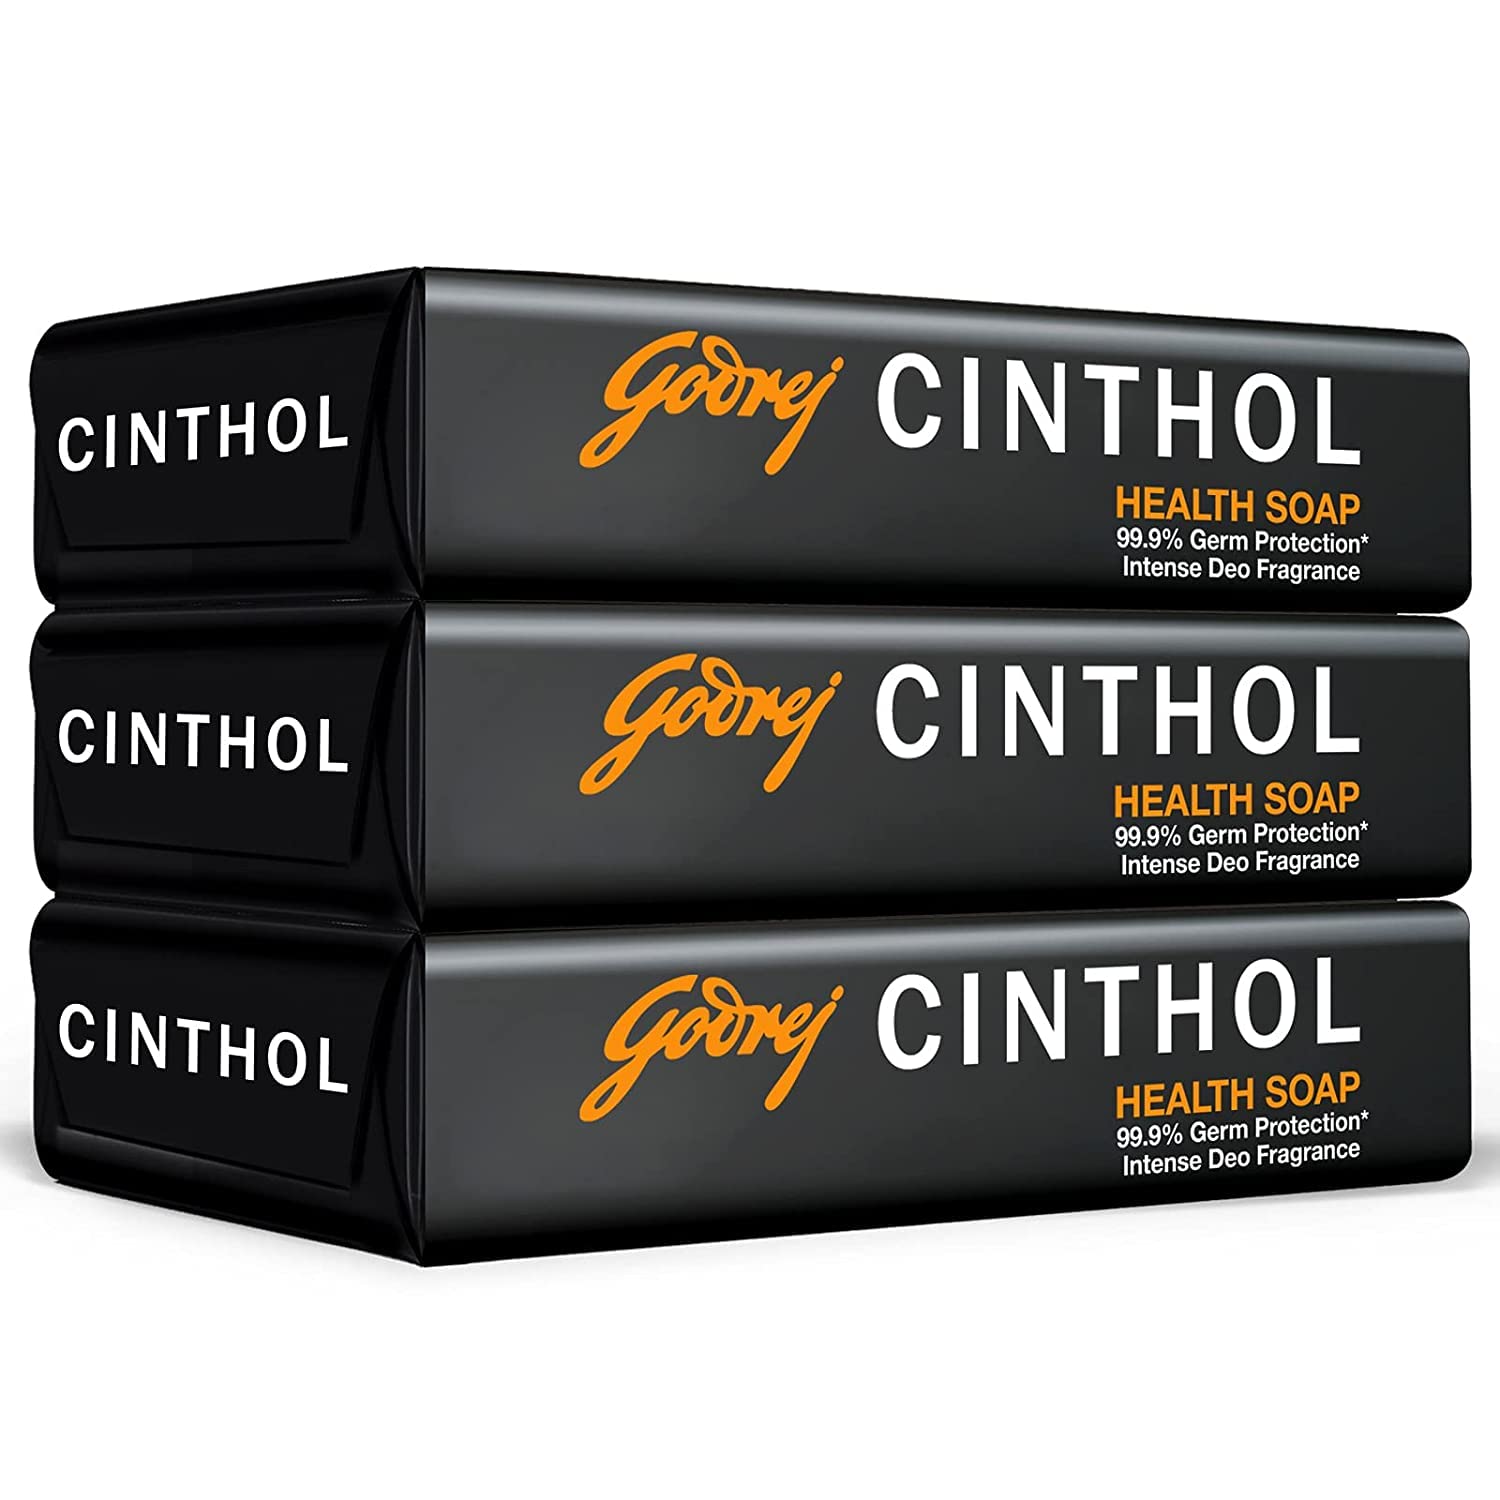 Cinthol health soap intense deo fragrance